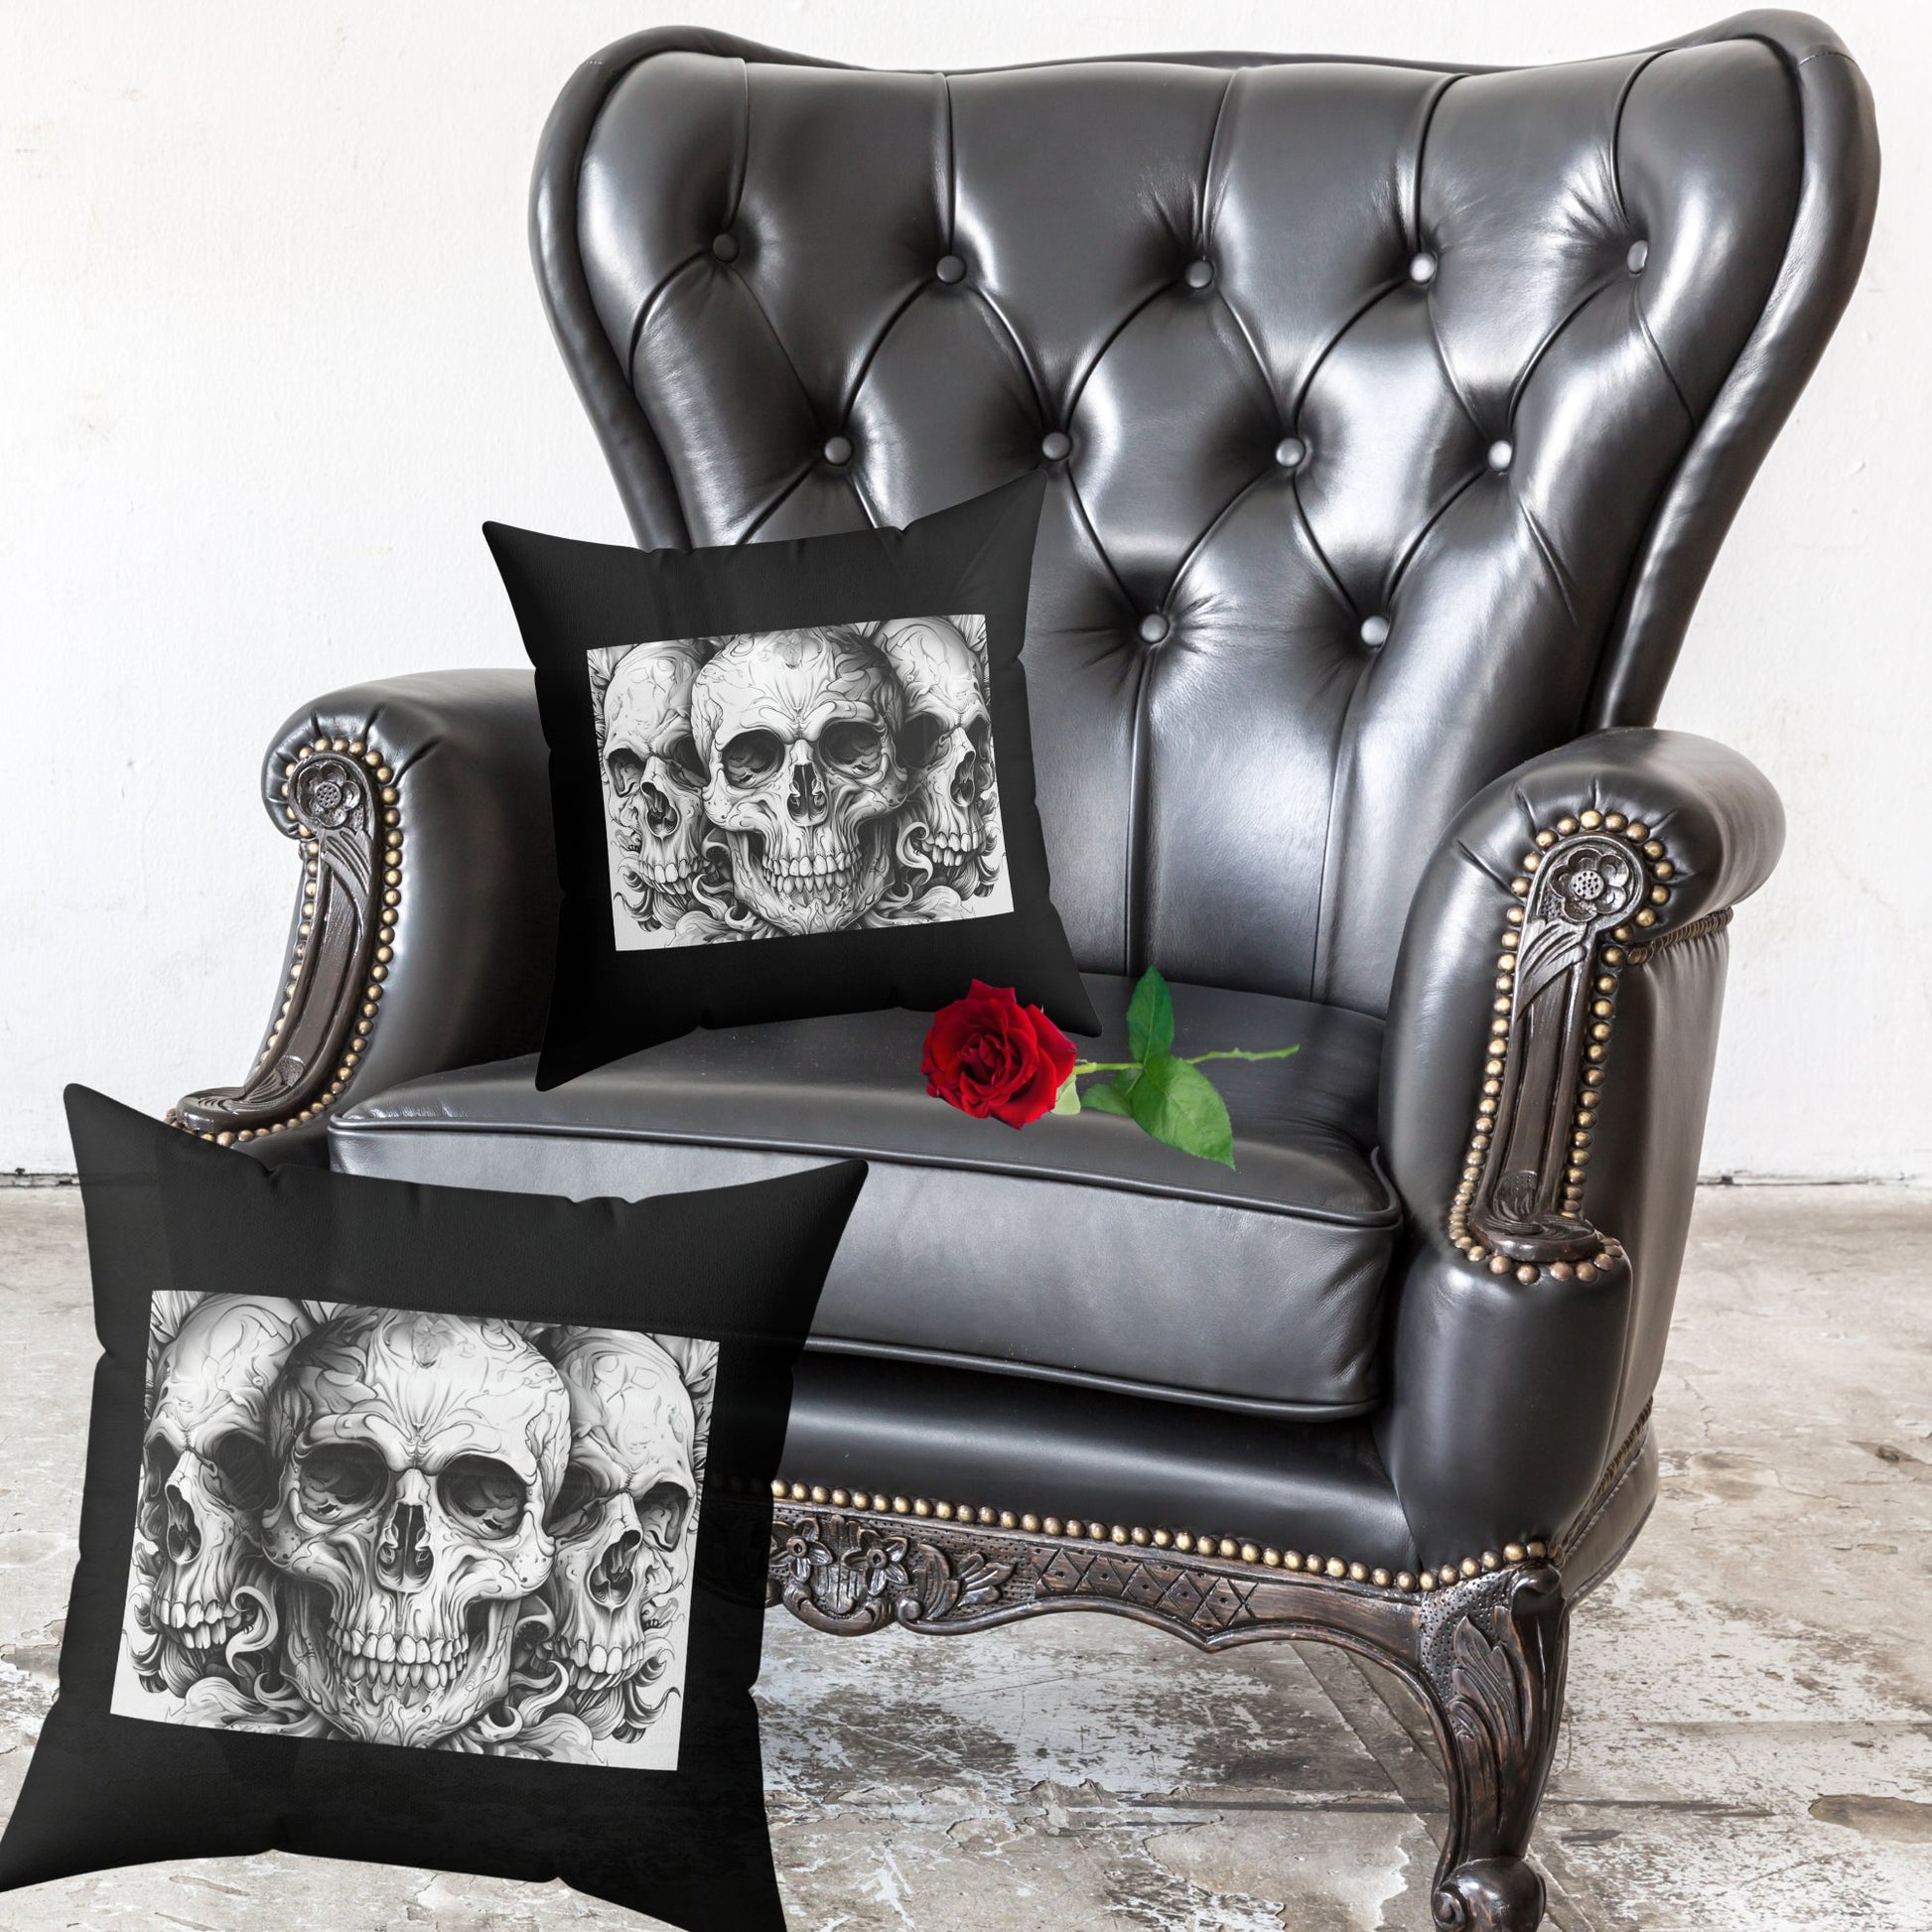 Goth Skull Art Throw Pillow, Decorative Dark Academia Art Pillow - FlooredByArt